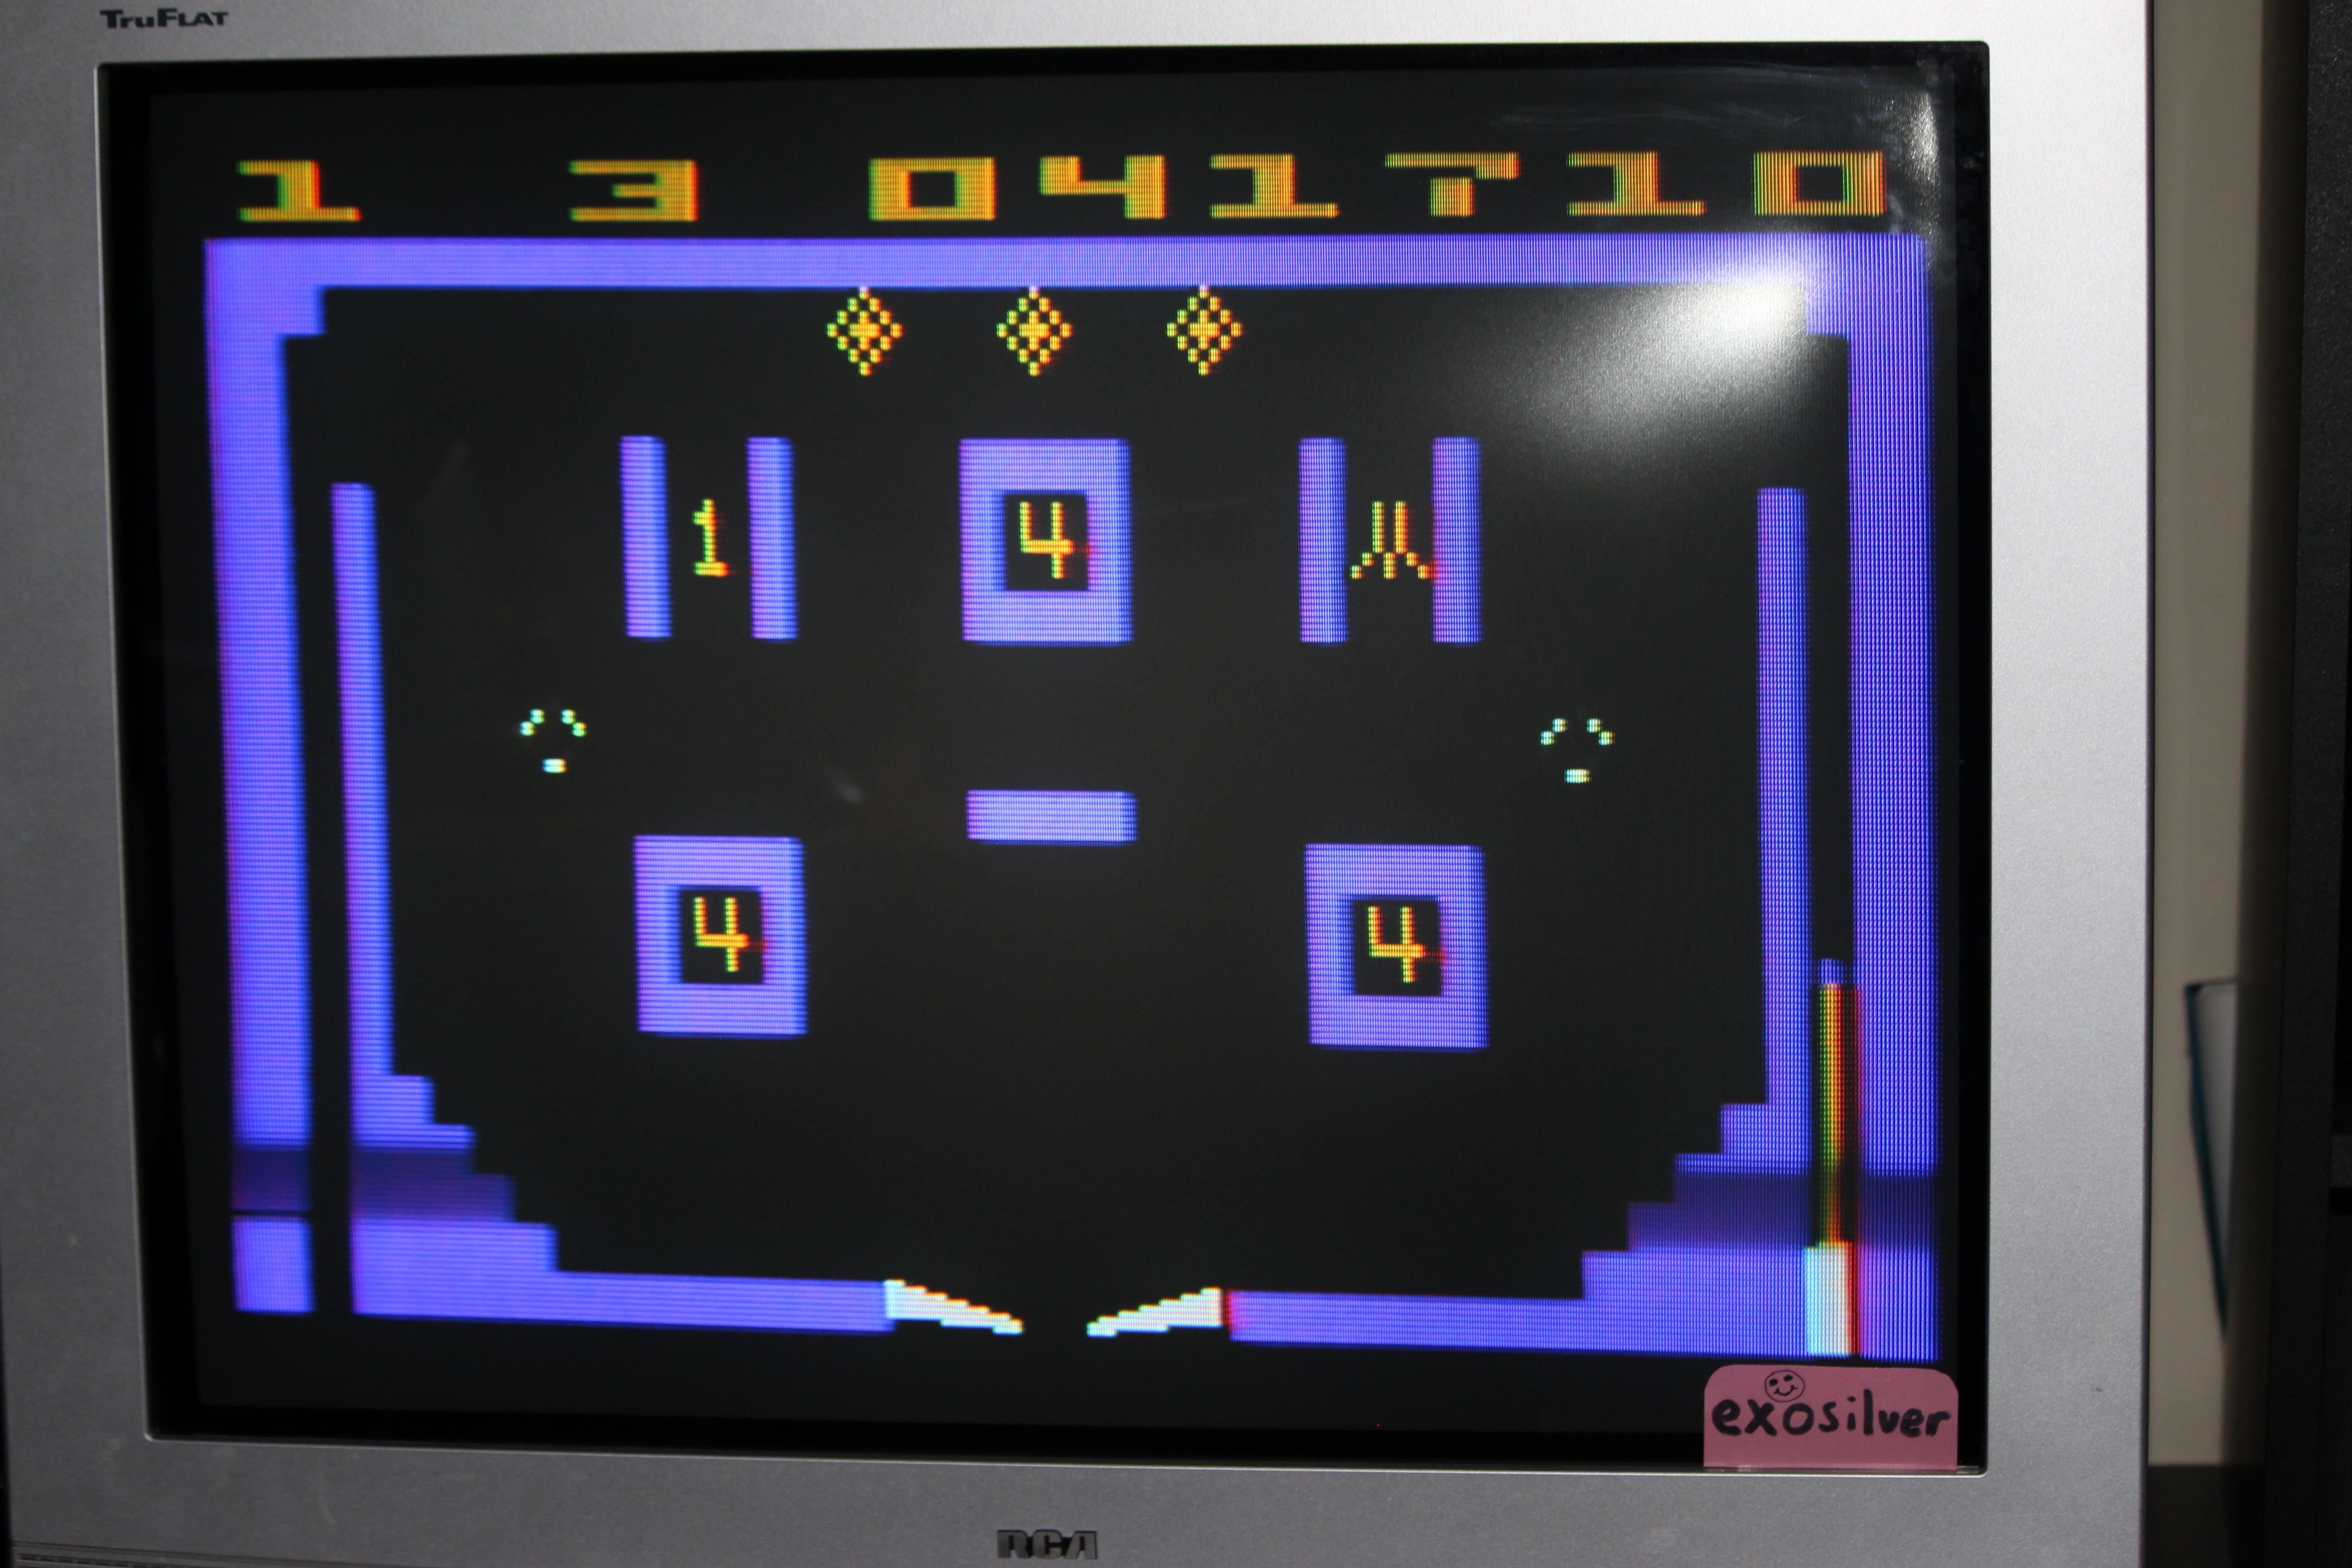 exosilver: Video Pinball (Atari 2600 Novice/B) 41,710 points on 2016-10-26 00:17:49